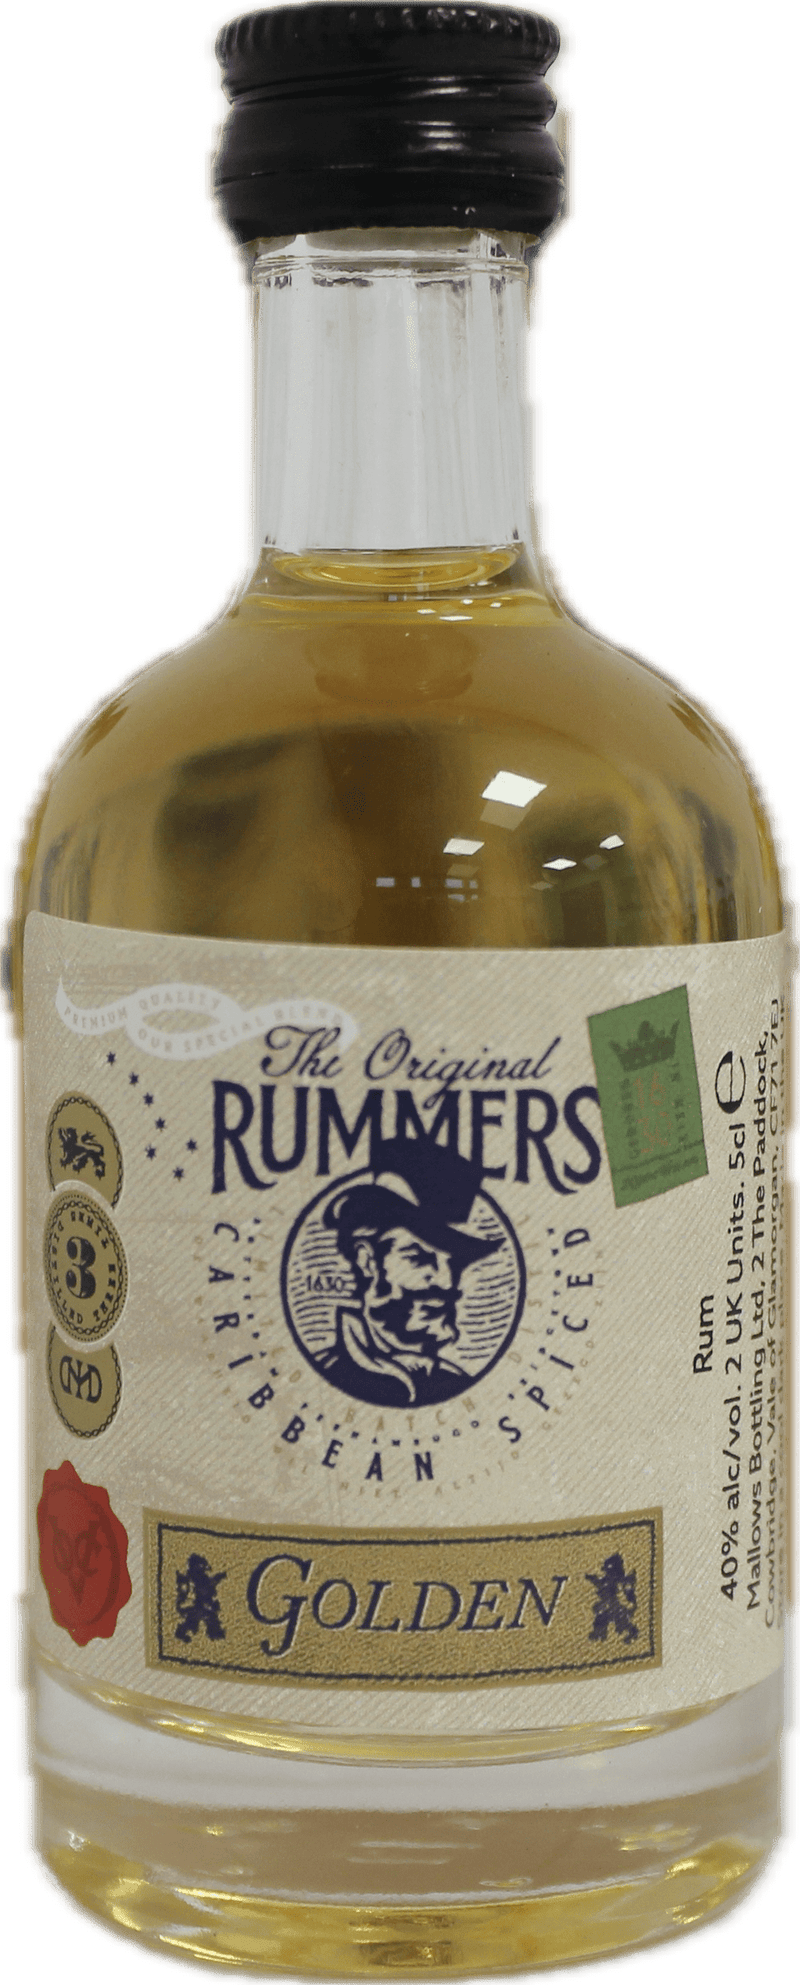 The Original Rummers Golden Rum Miniature 5cl